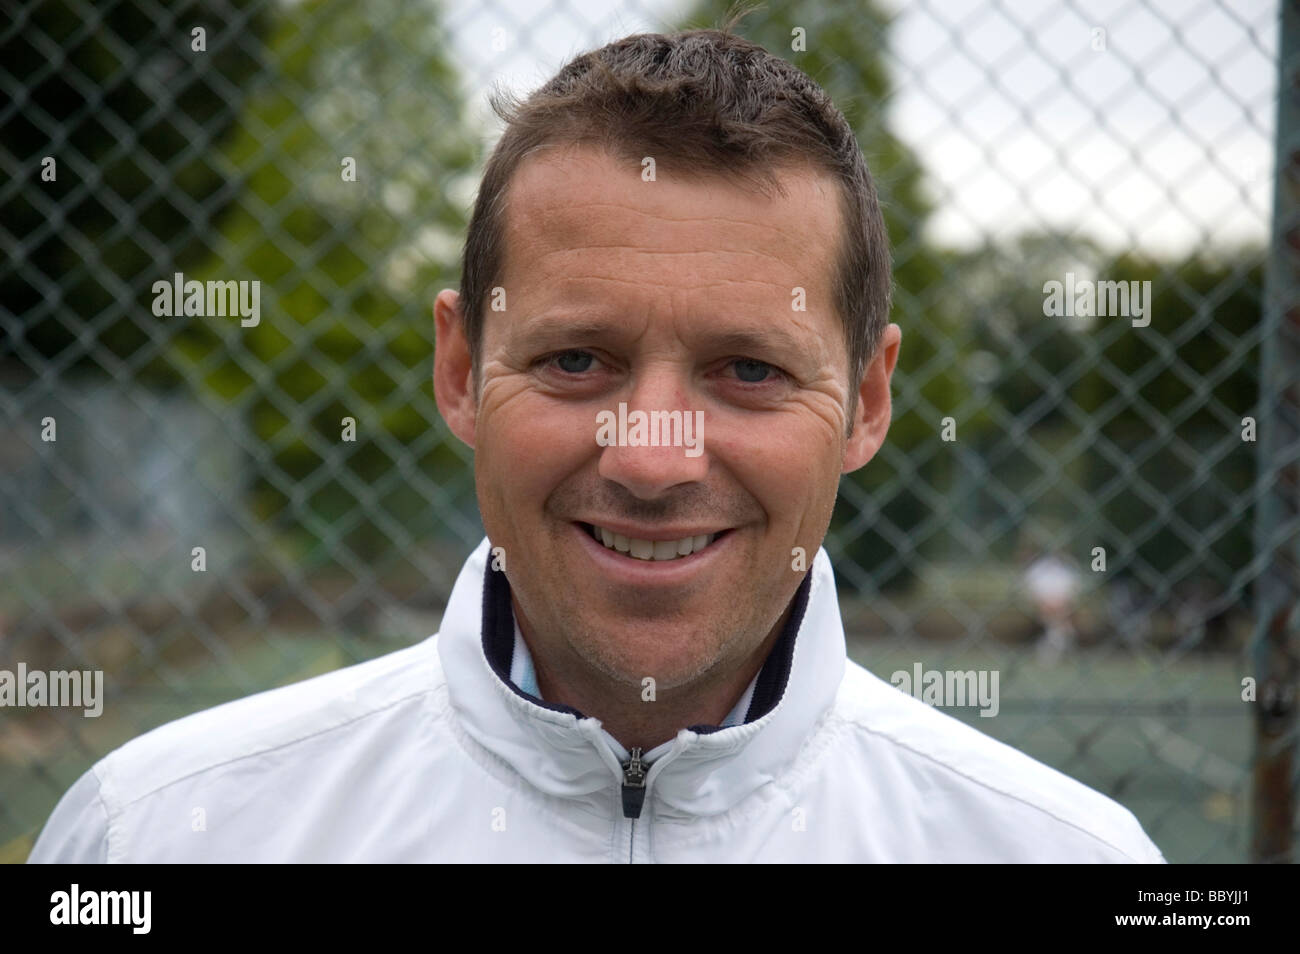 Dan Bloxham, head coach of the Wimbledon Junior Tennis Initiative and Master of Ceremonies, - dan-bloxham-head-coach-of-the-wimbledon-junior-tennis-initiative-and-BBYJJ1